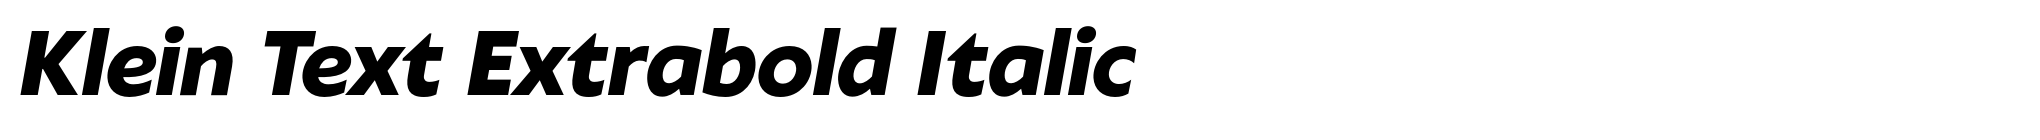 Klein Text Extrabold Italic image